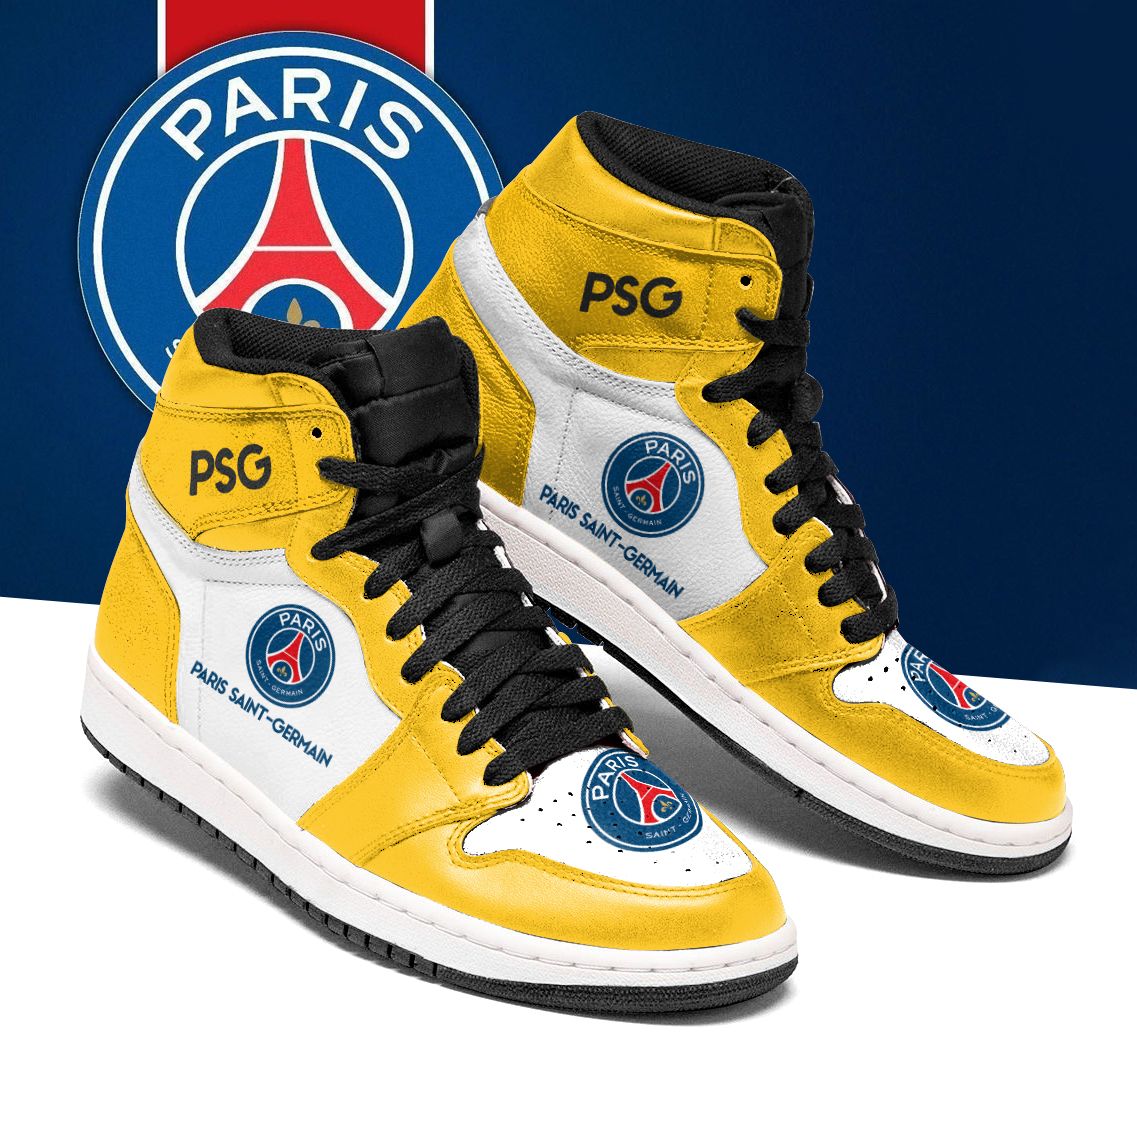 Paris Saint Germain air jordan high top shoes 2.2